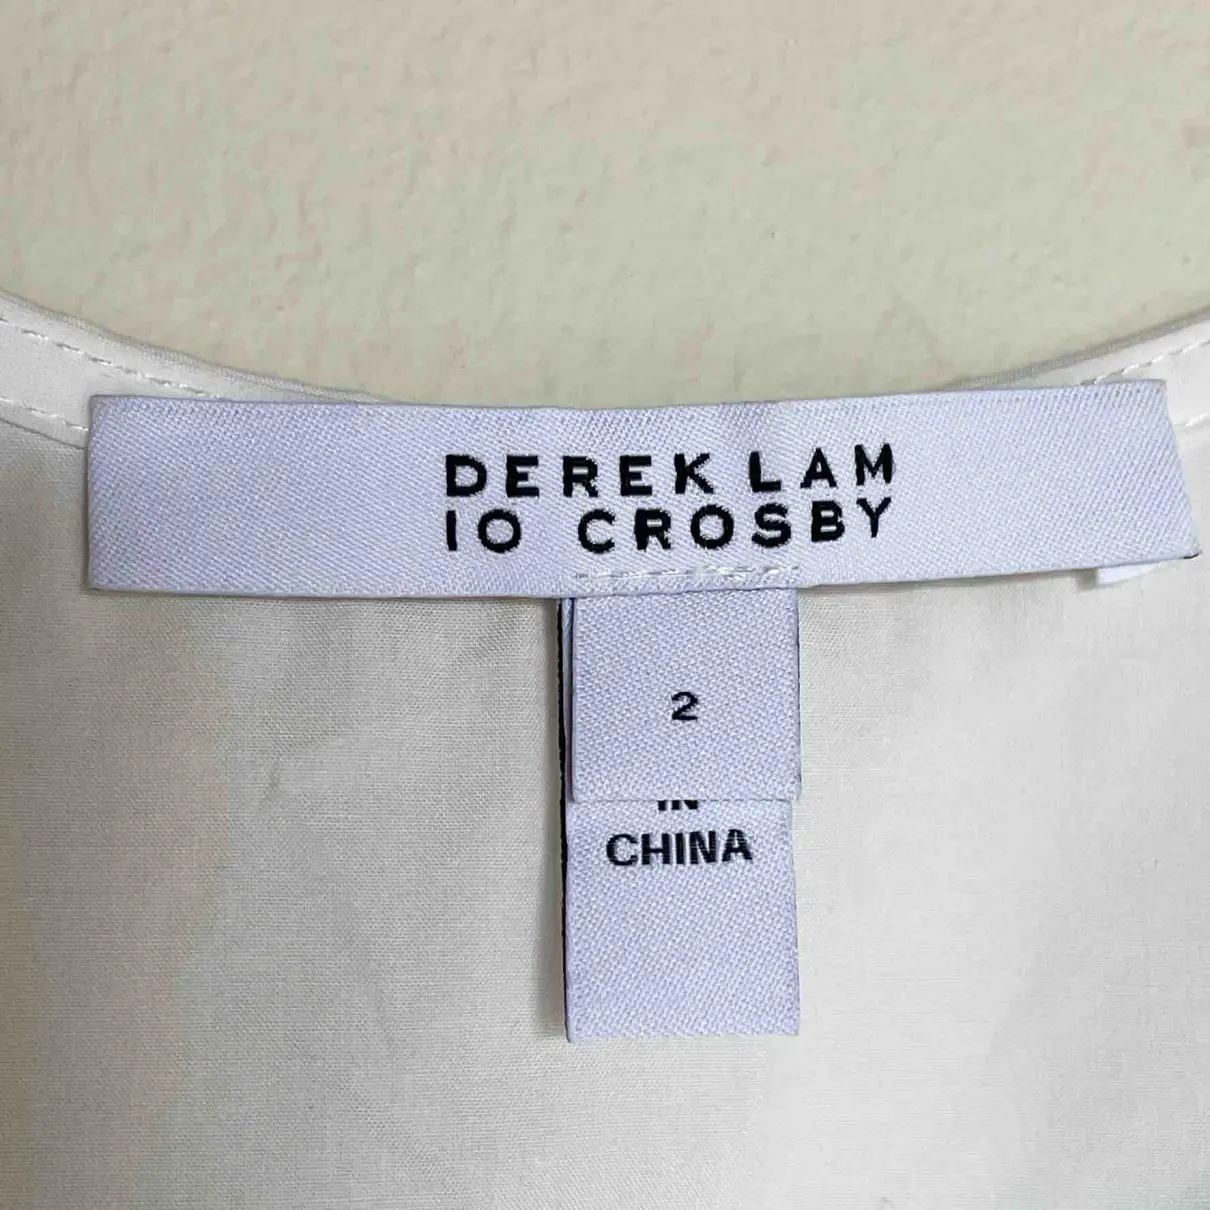 Luxury 10 Crosby by Derek Lam Tops Women